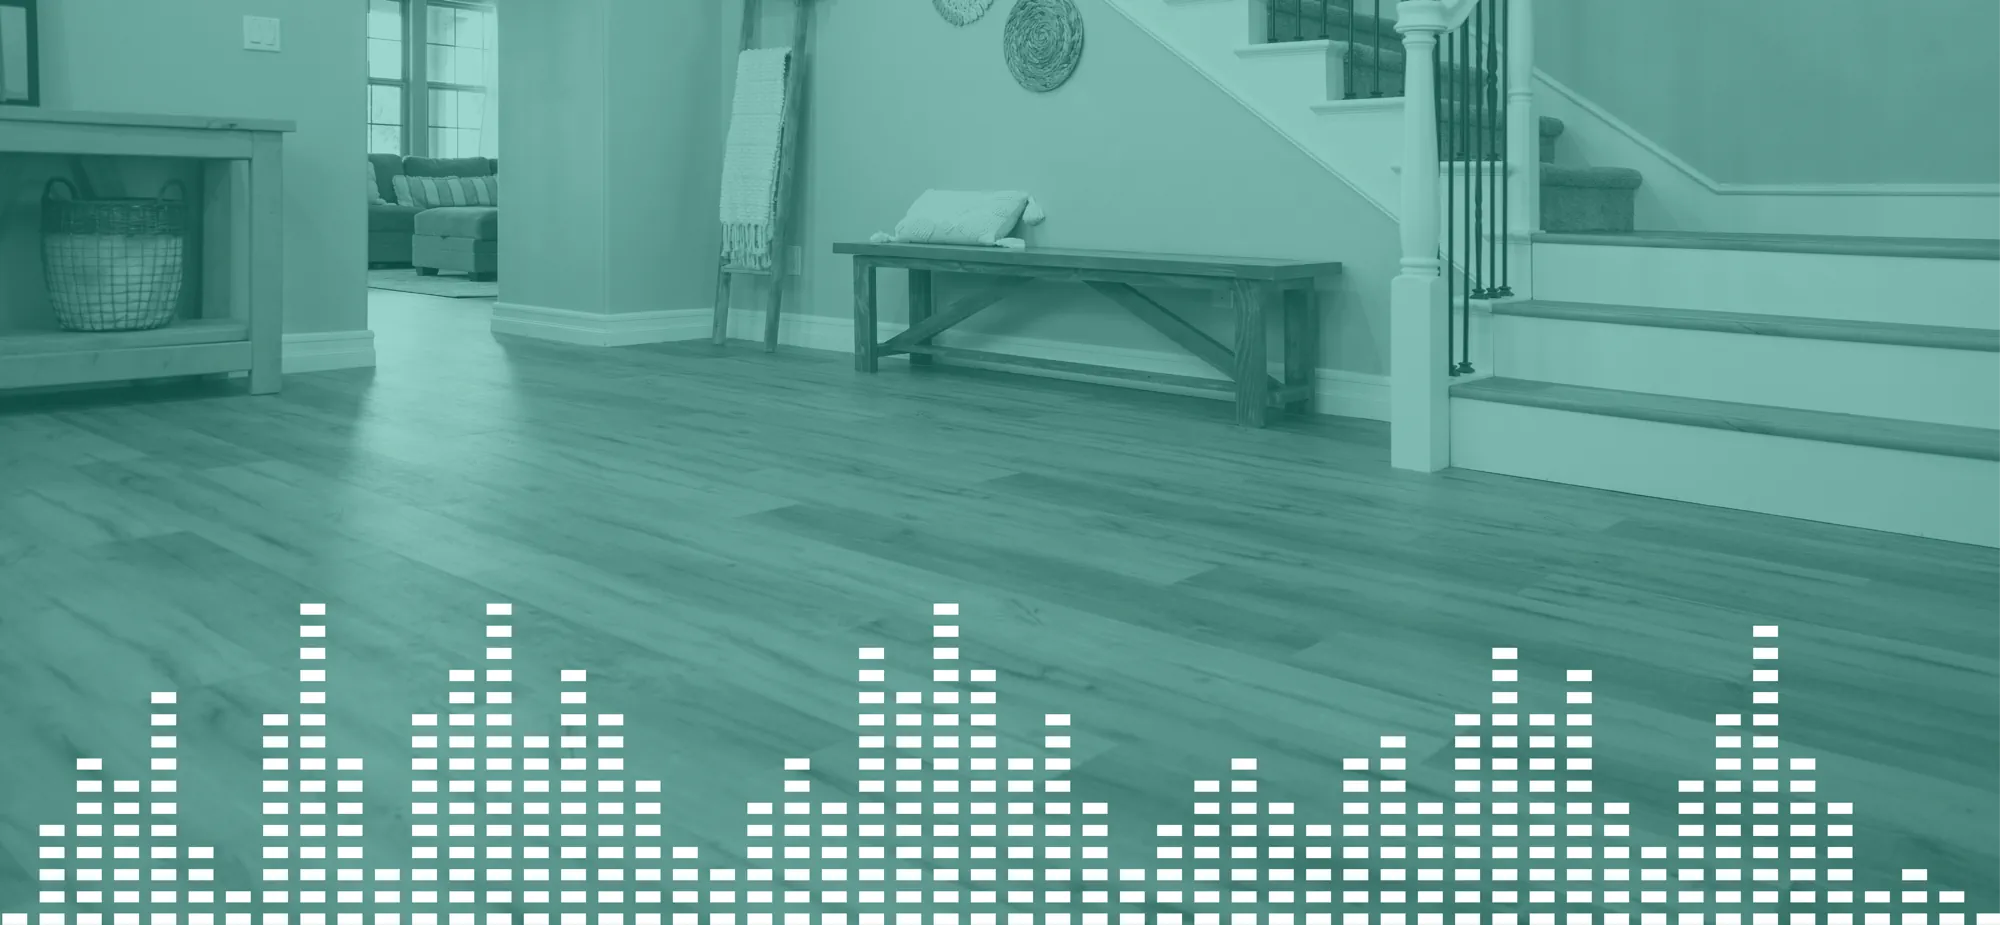 Audio wave measurement diagram over a living room with luxury vinyl flooring installed